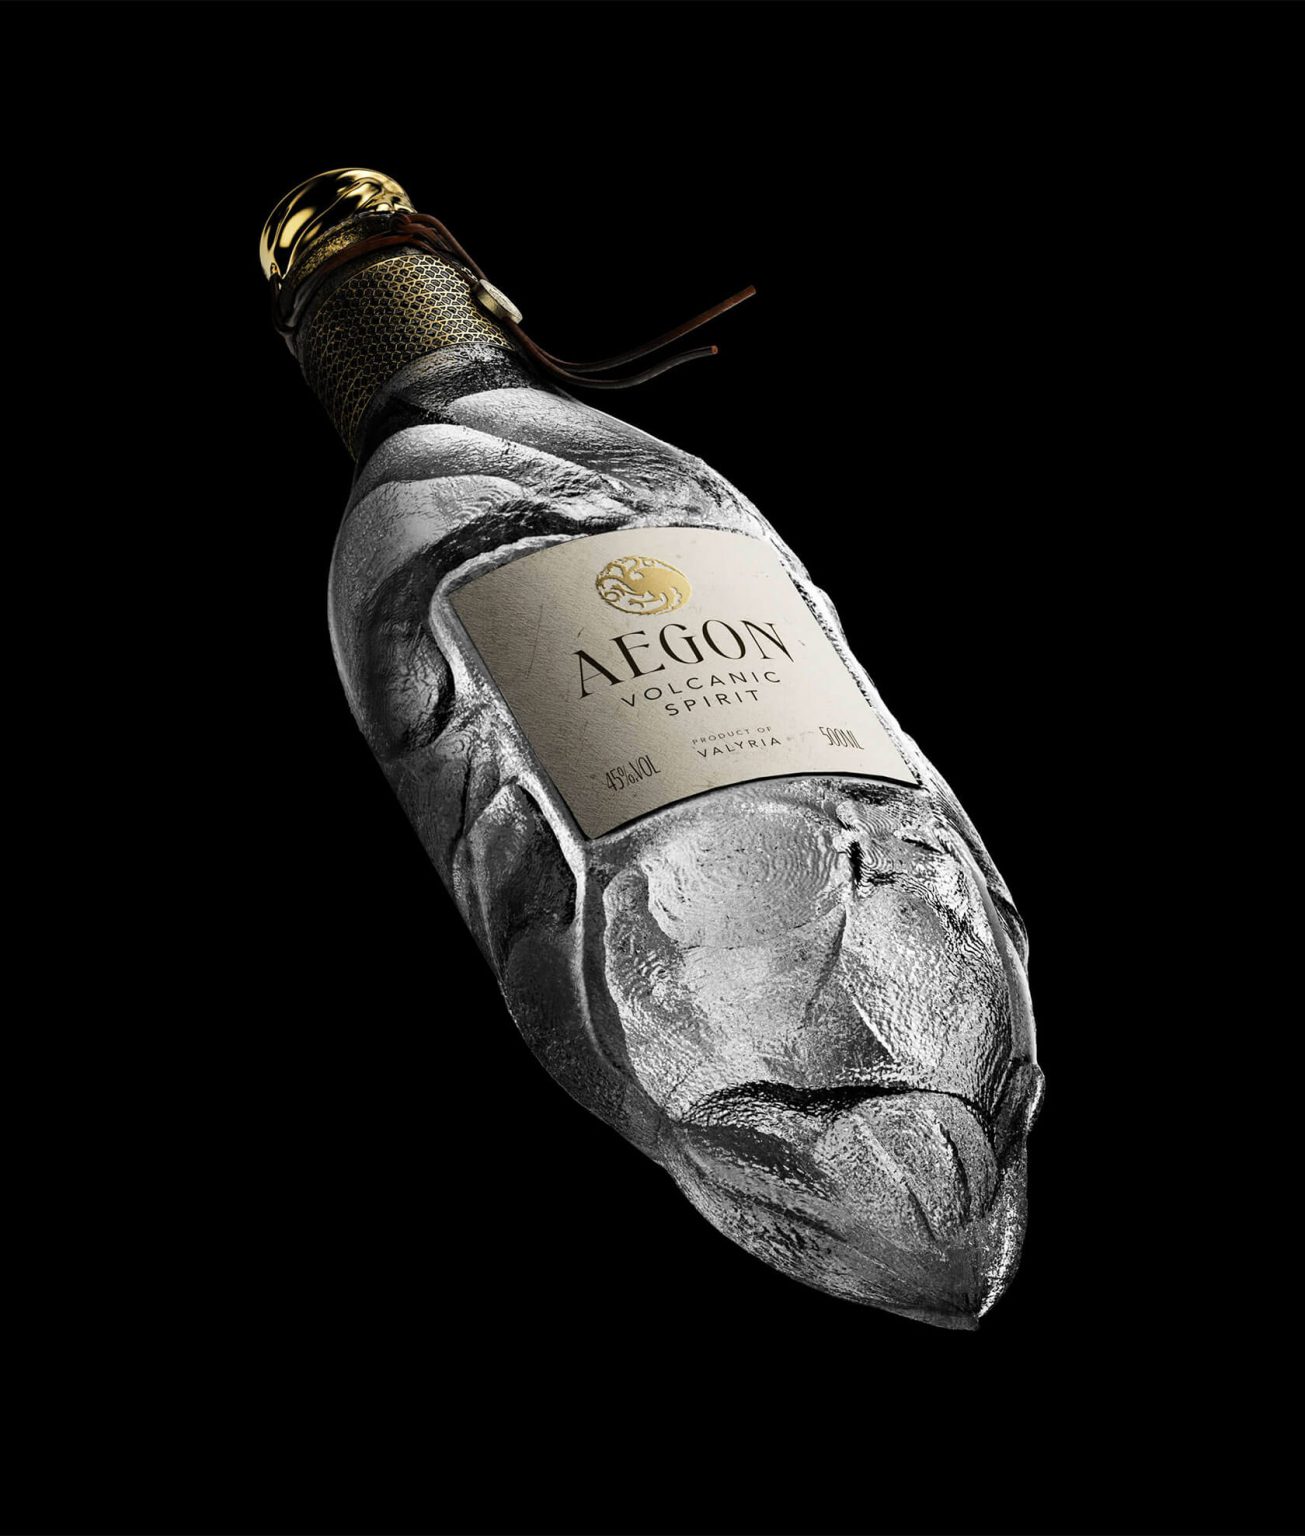 Kingpin: 高端酒瓶包装设计